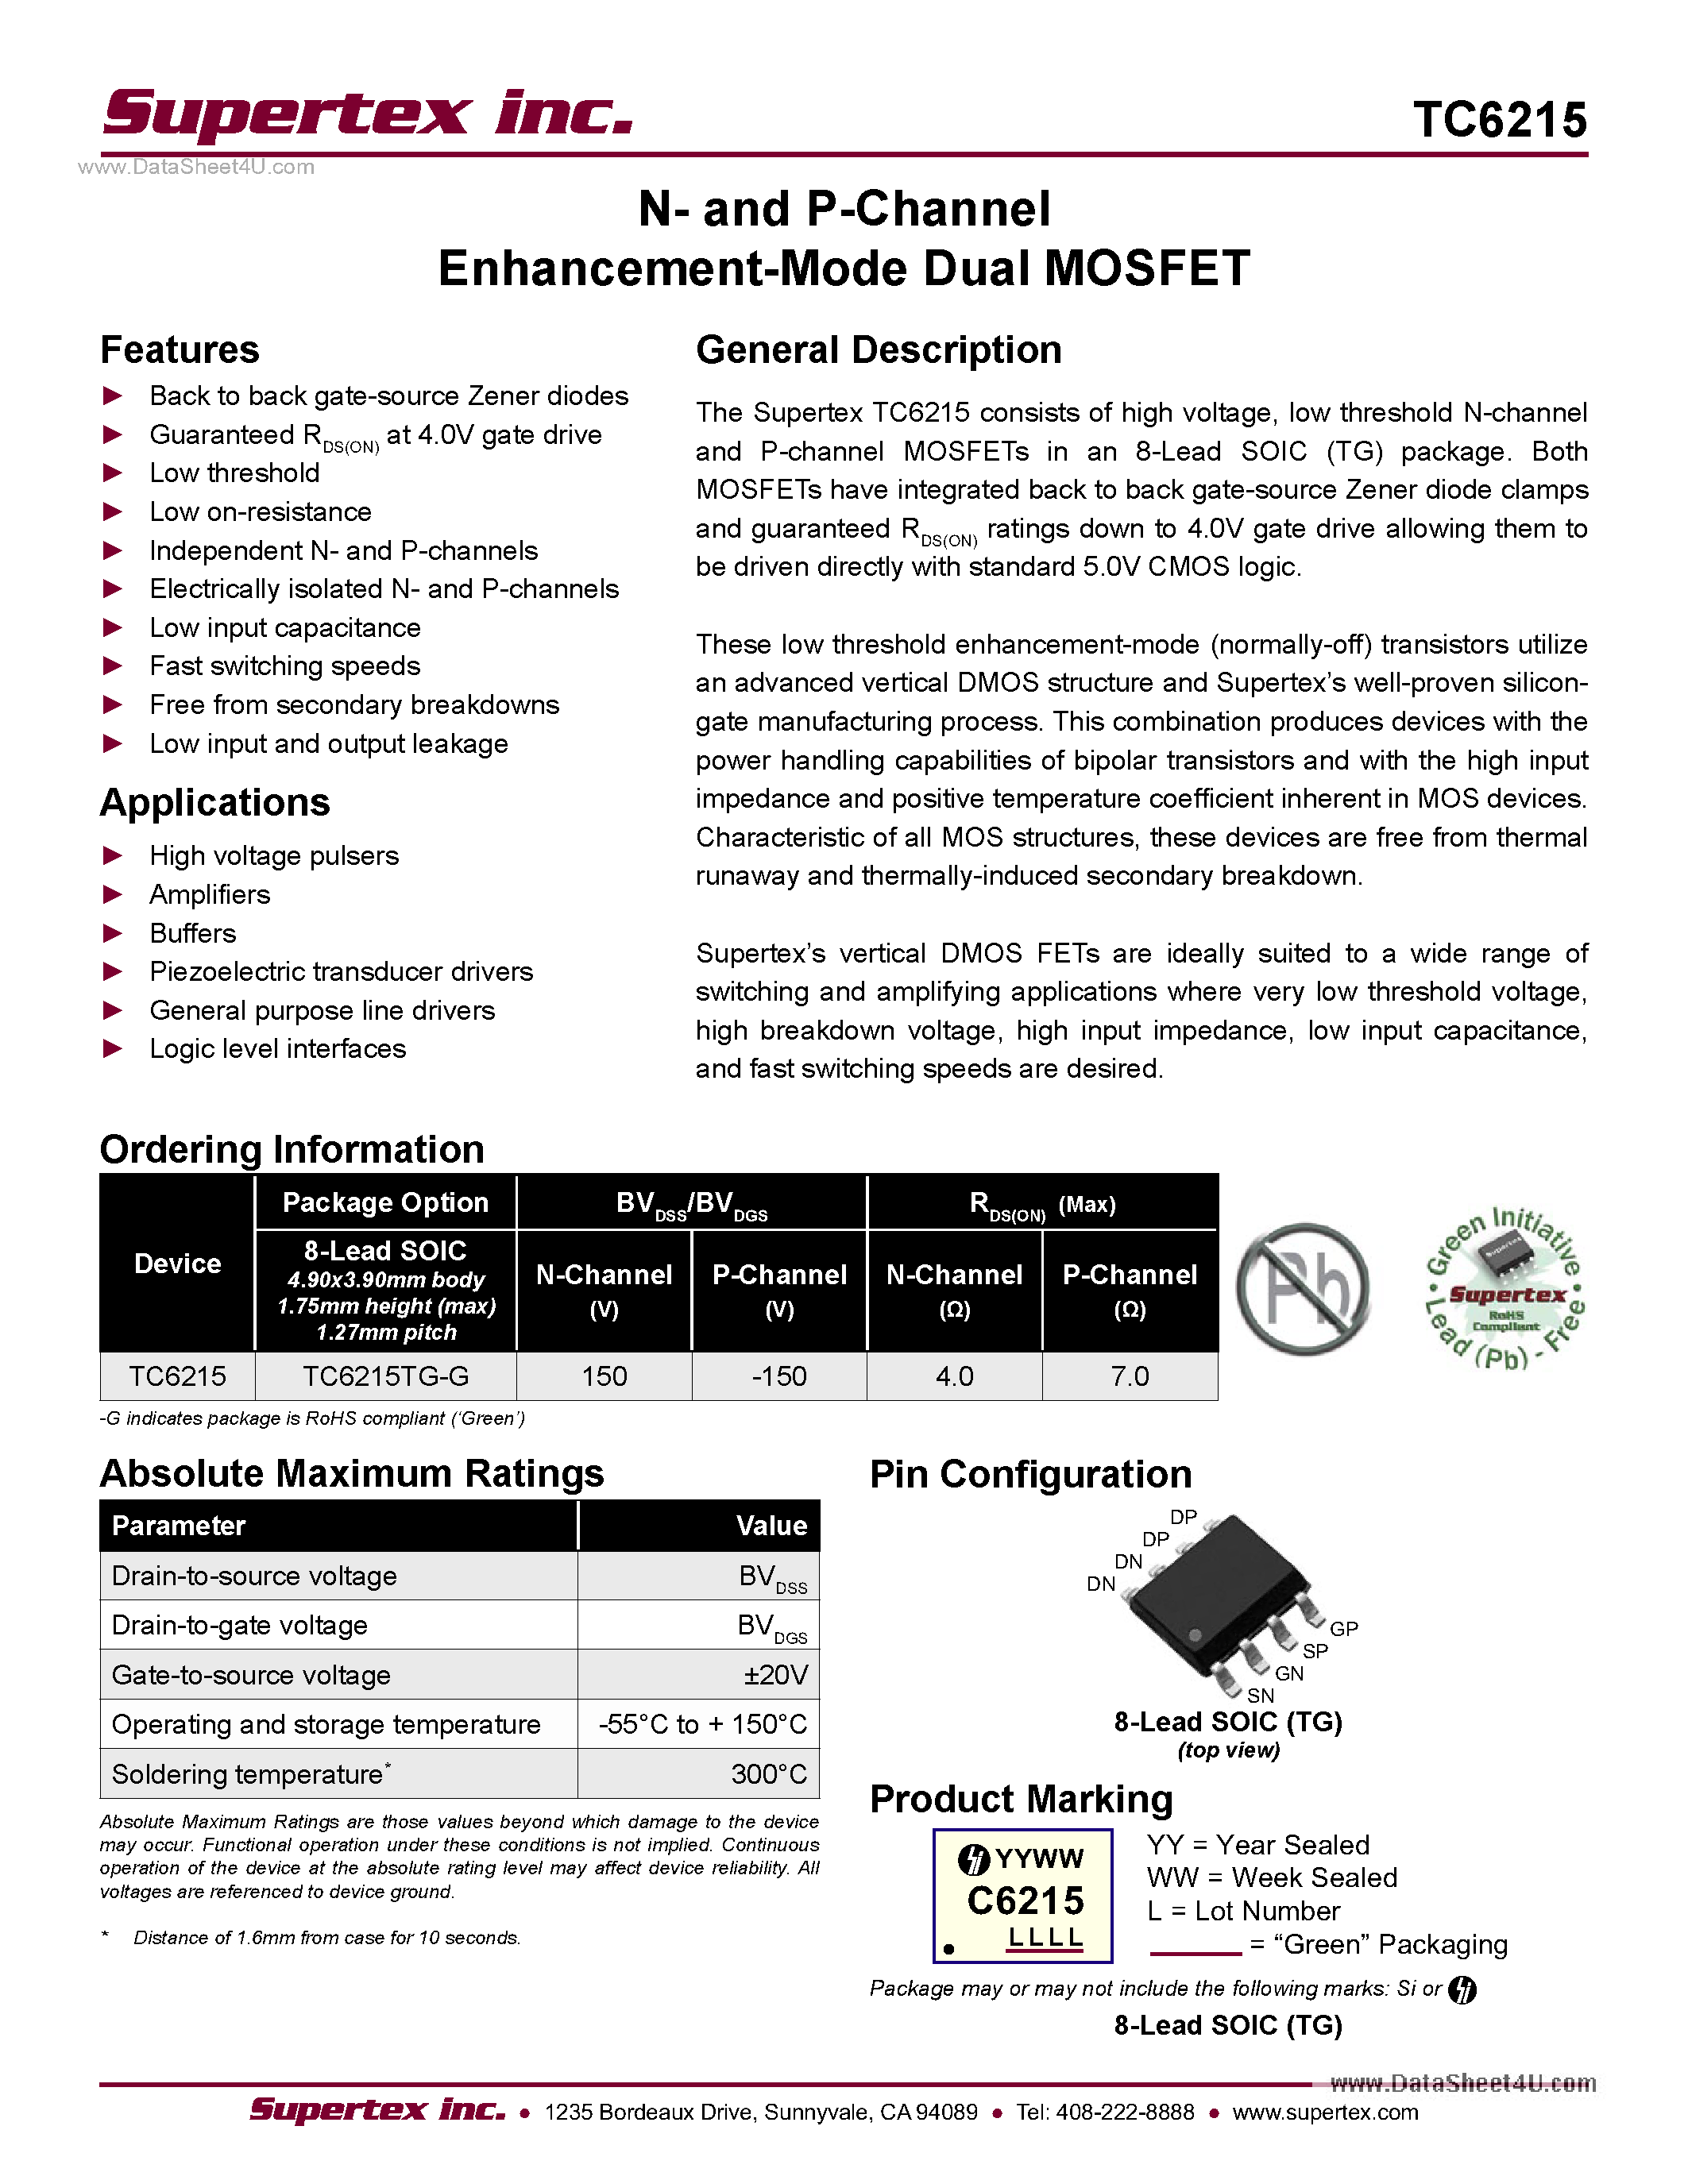 Datasheet TC6215 - Enhancement-Mode Dual MOSFET page 1